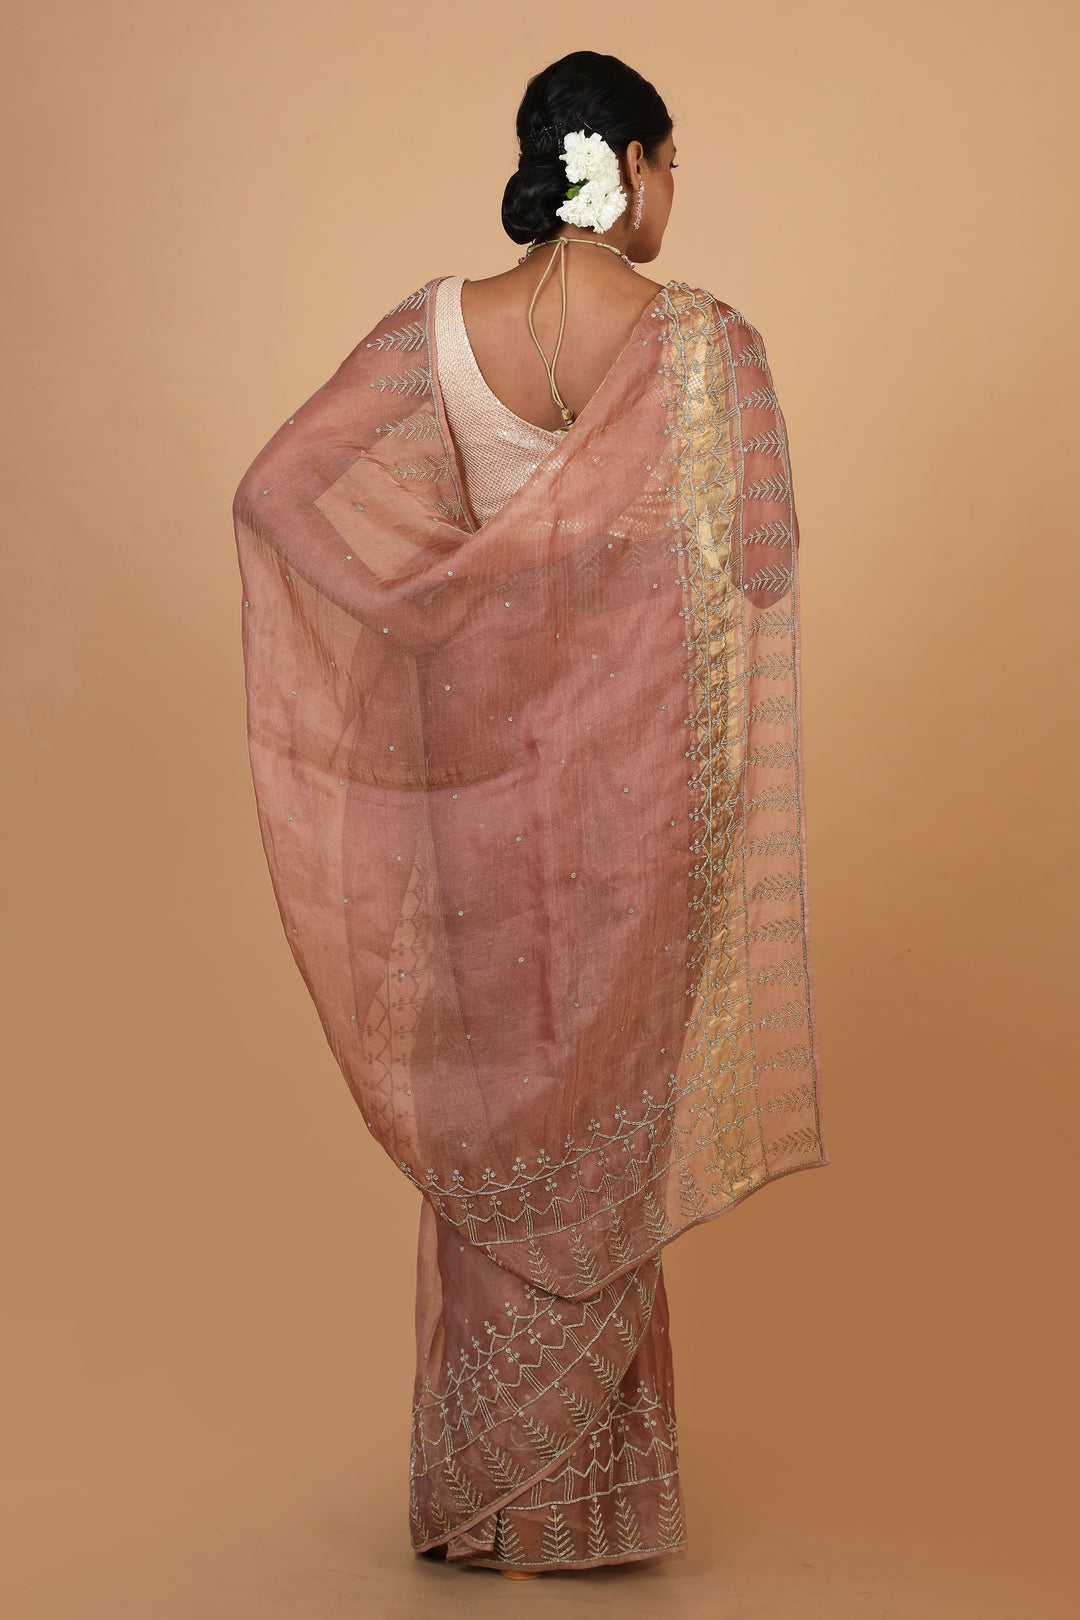 Buy Party Wear Designer Saree In Peach Colour At Online Simaaya